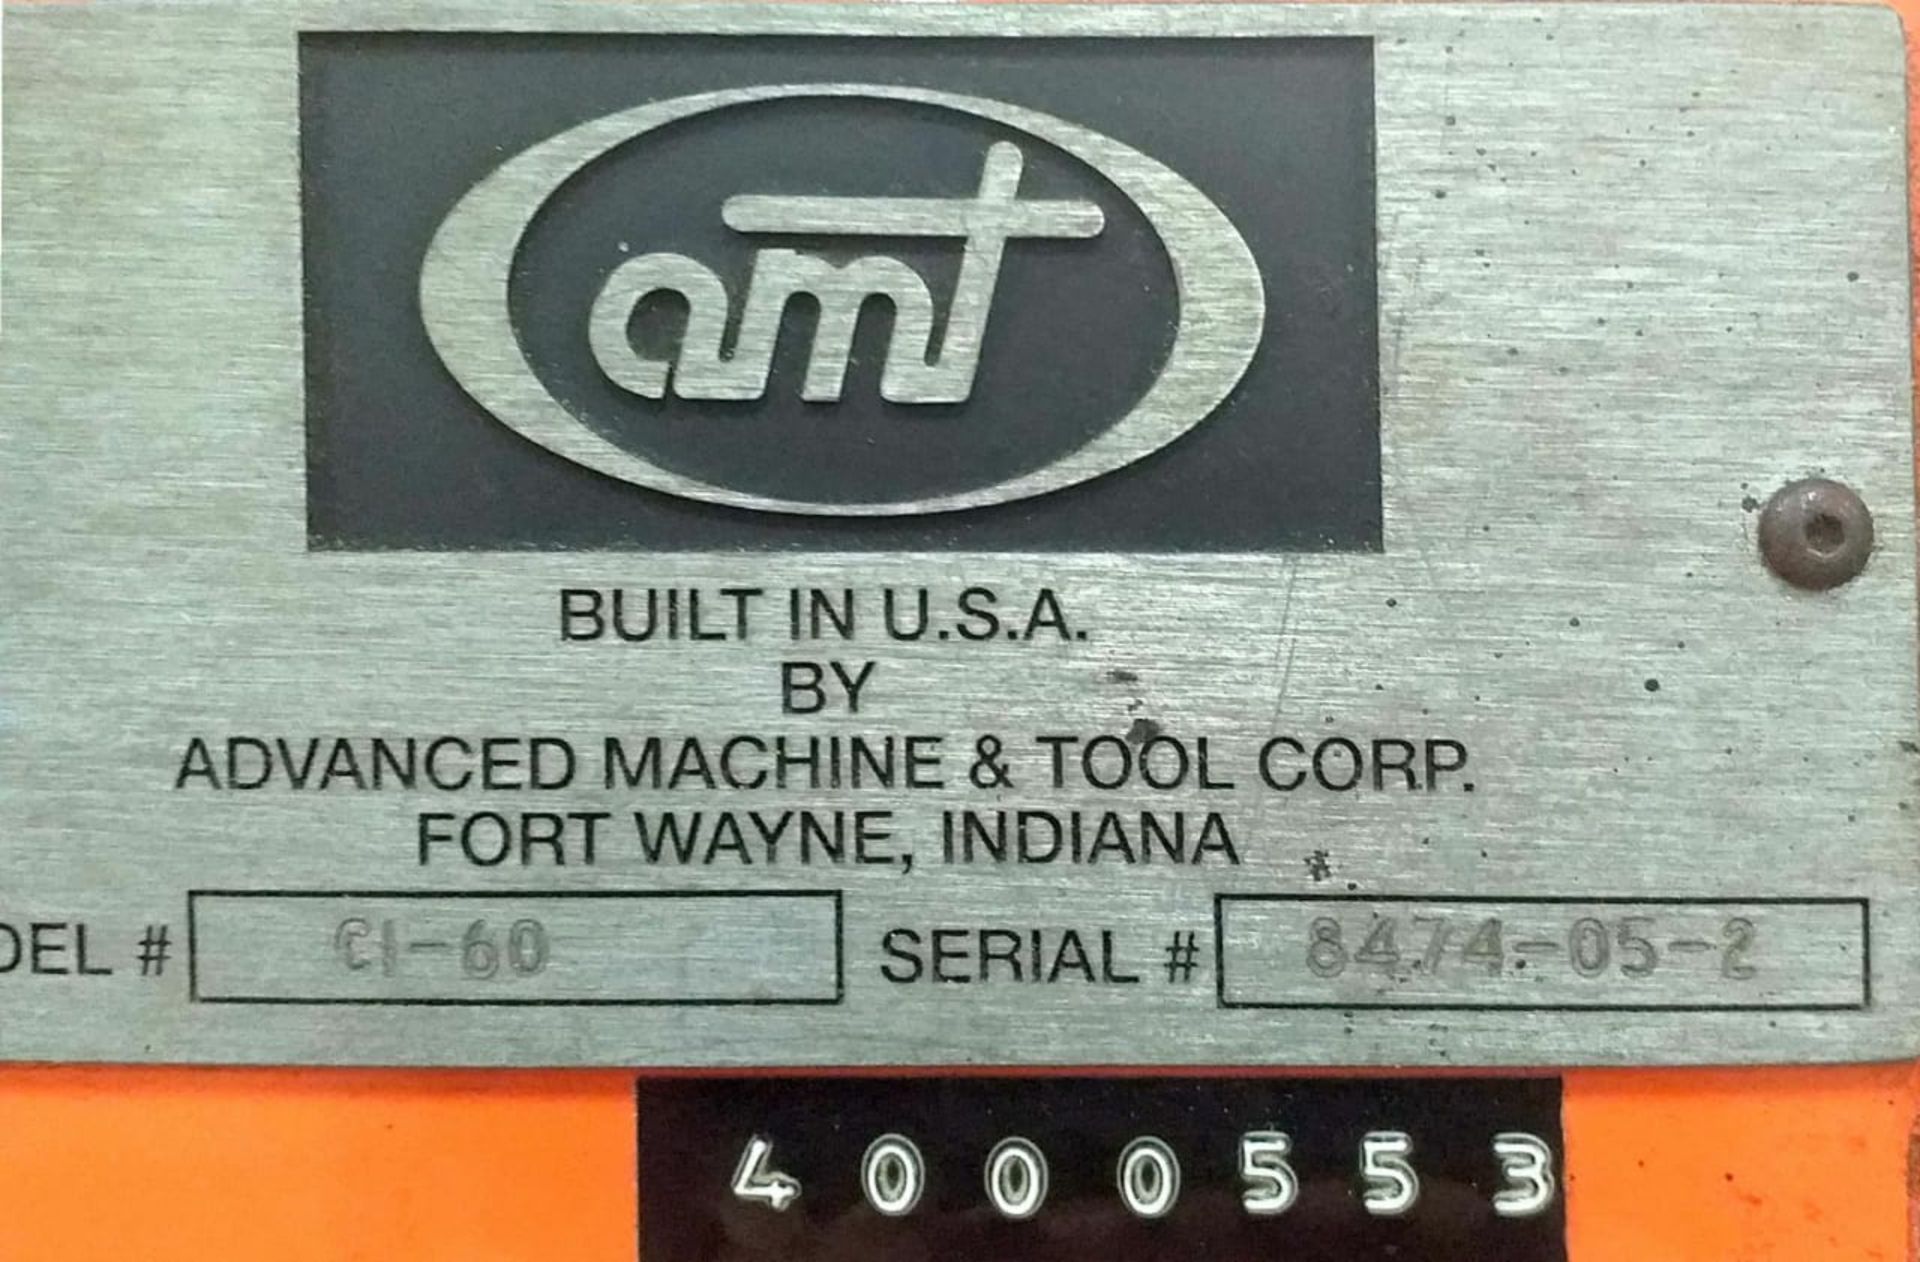 AMT Inserter, Model CI-60, N/S 8474-05-2, 480 volts, Máquina Regal 157; Insertadora - Image 2 of 2